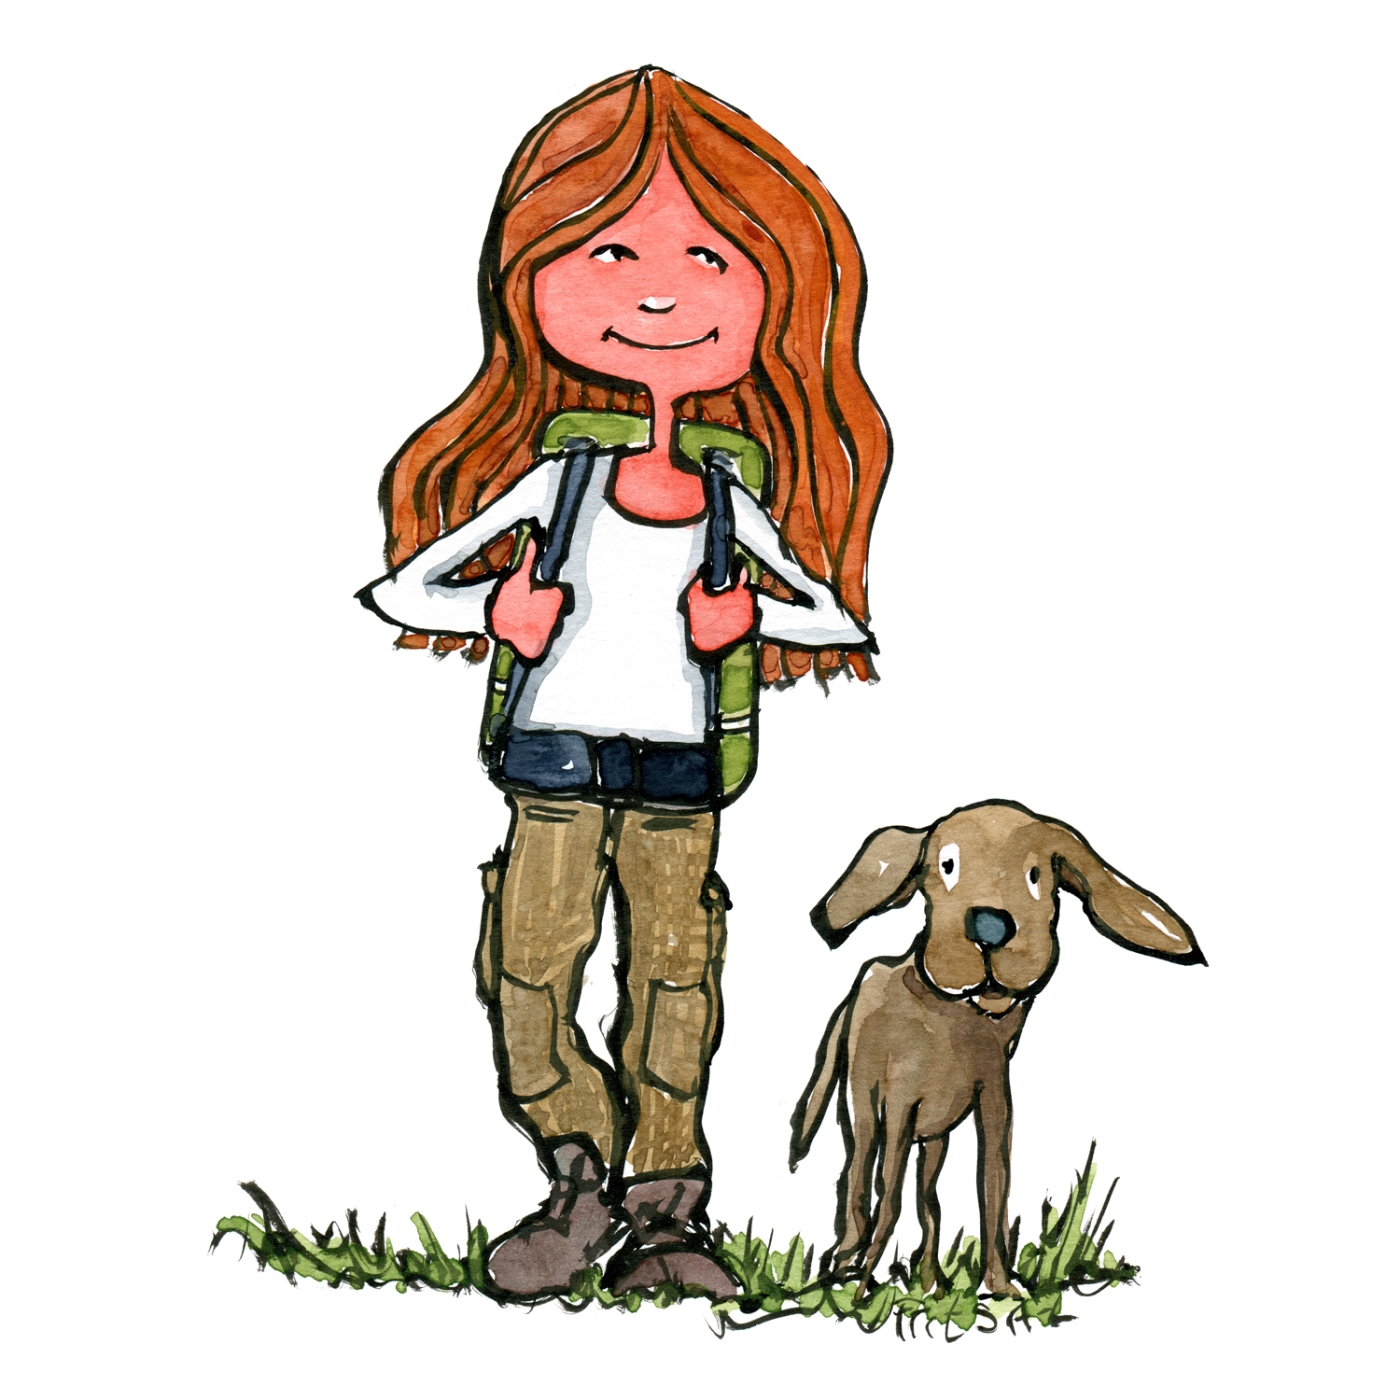 hikertypes - dog hiker illustration, girl with backpack walking with a dog